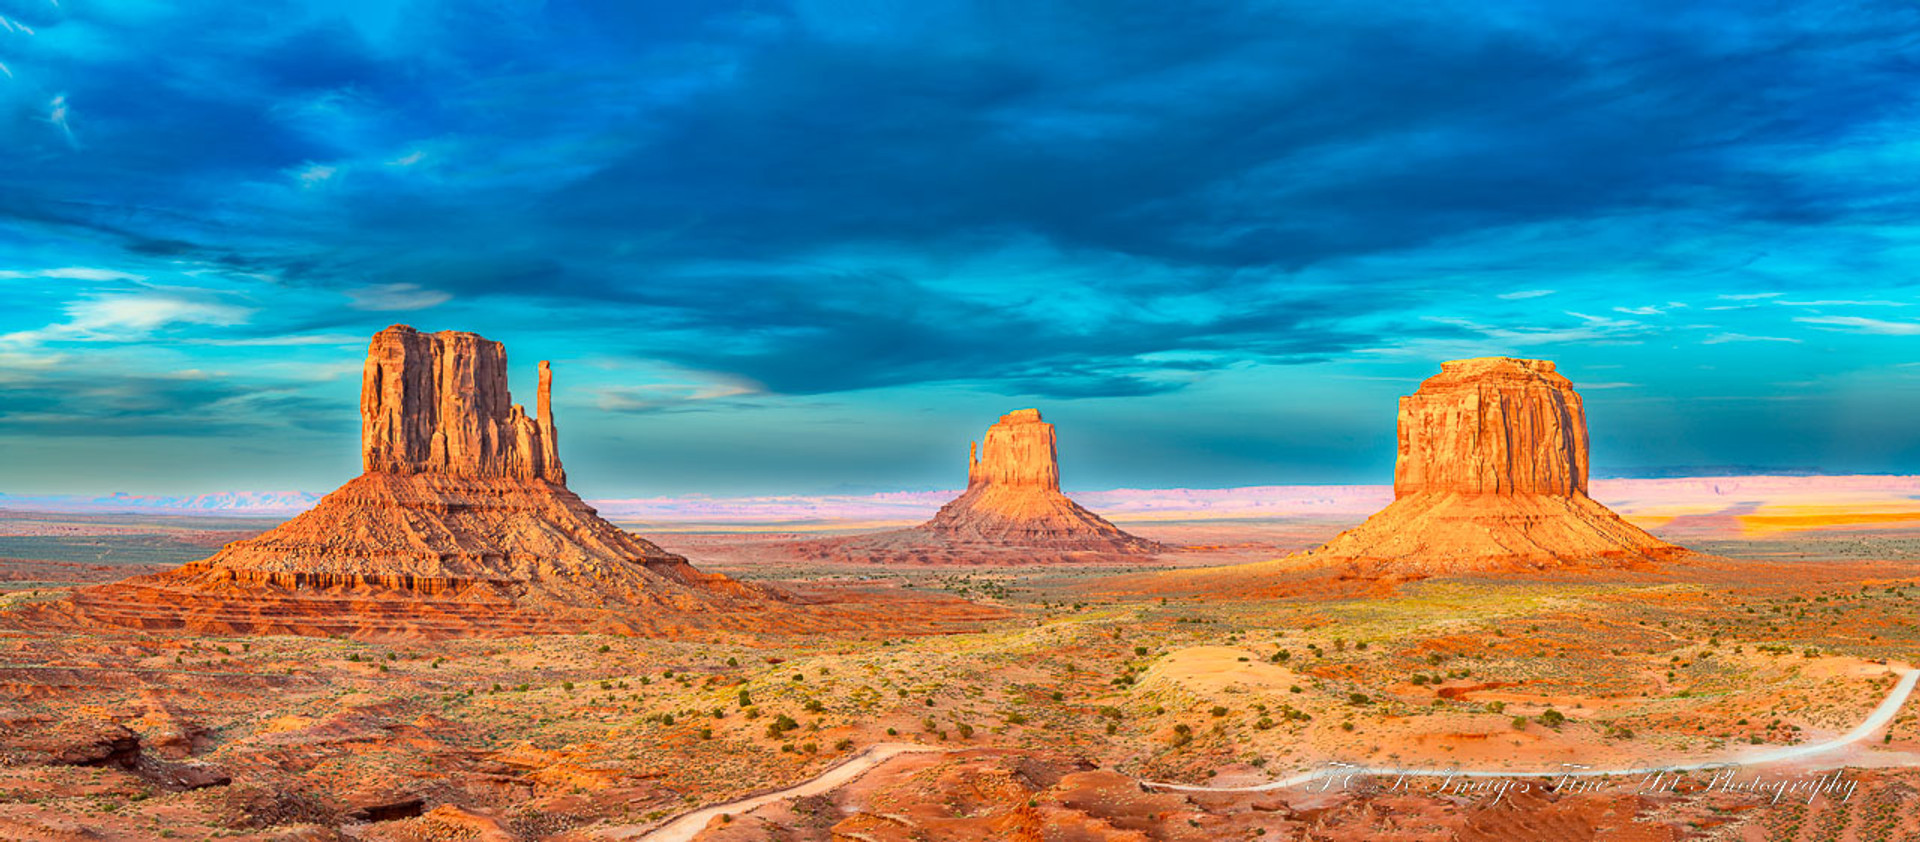 Monument Valley Tribal Park - T&K Images - Fine Art Photography